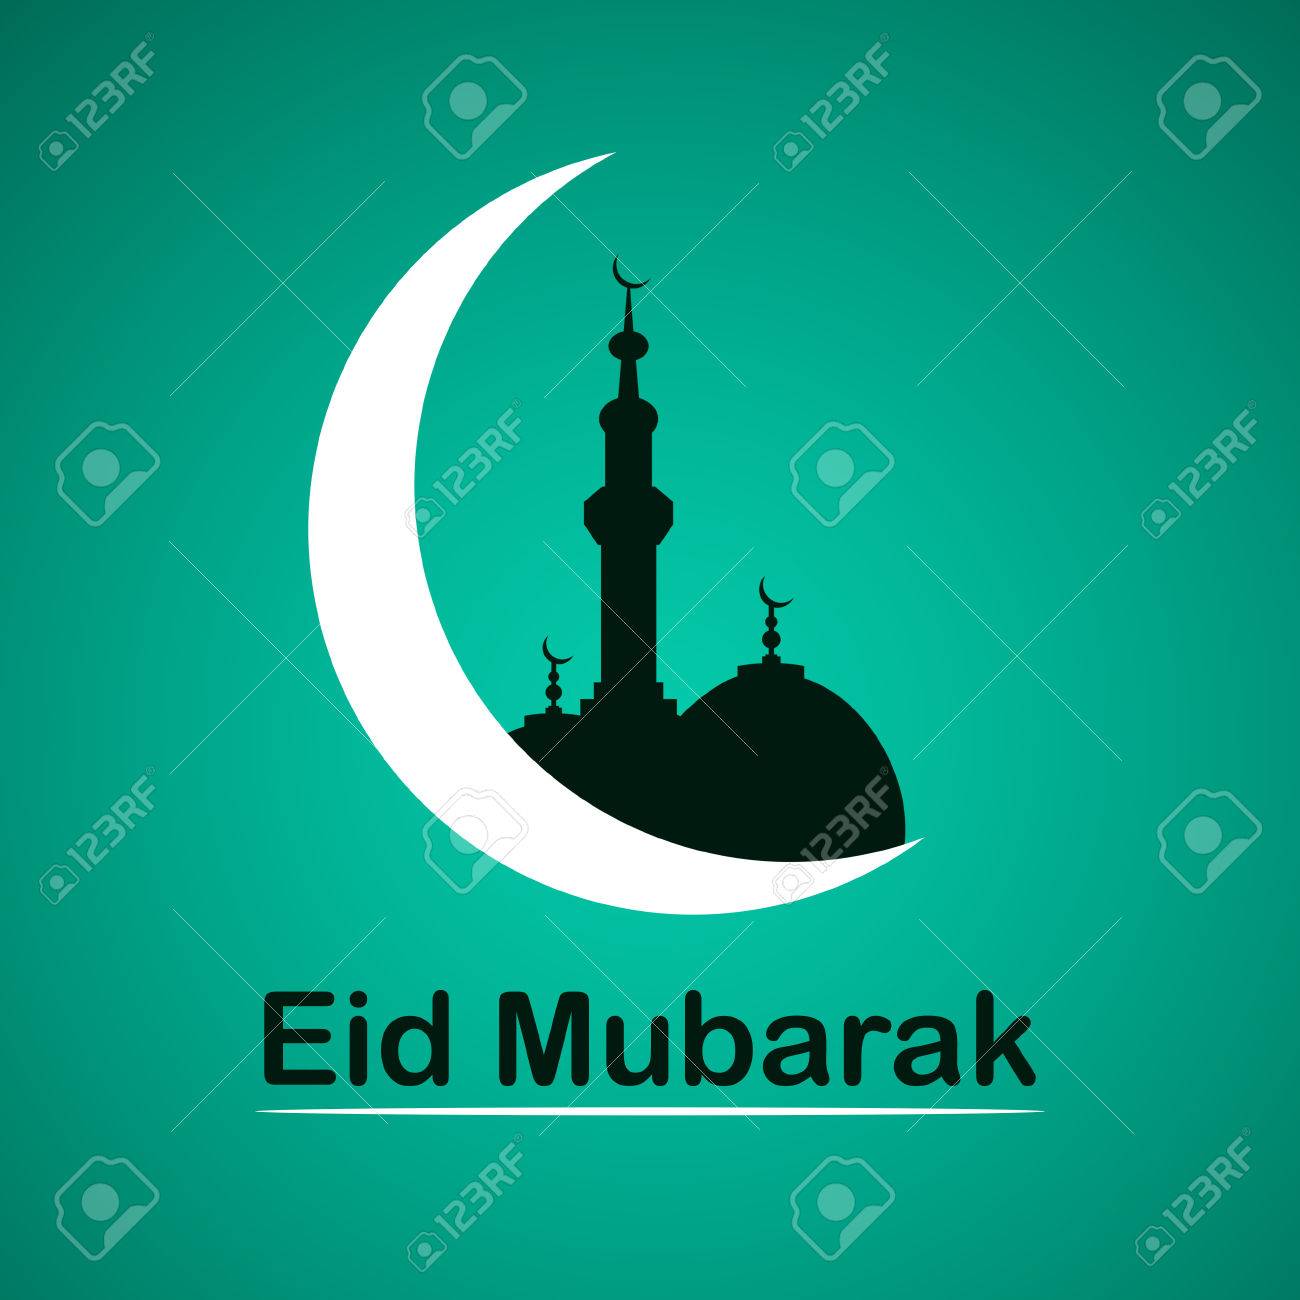 Eid Al Adha Mobile Phone Wallpaper Background Design Vector Illustration  Wallpaper Image For Free Download - Pngtree